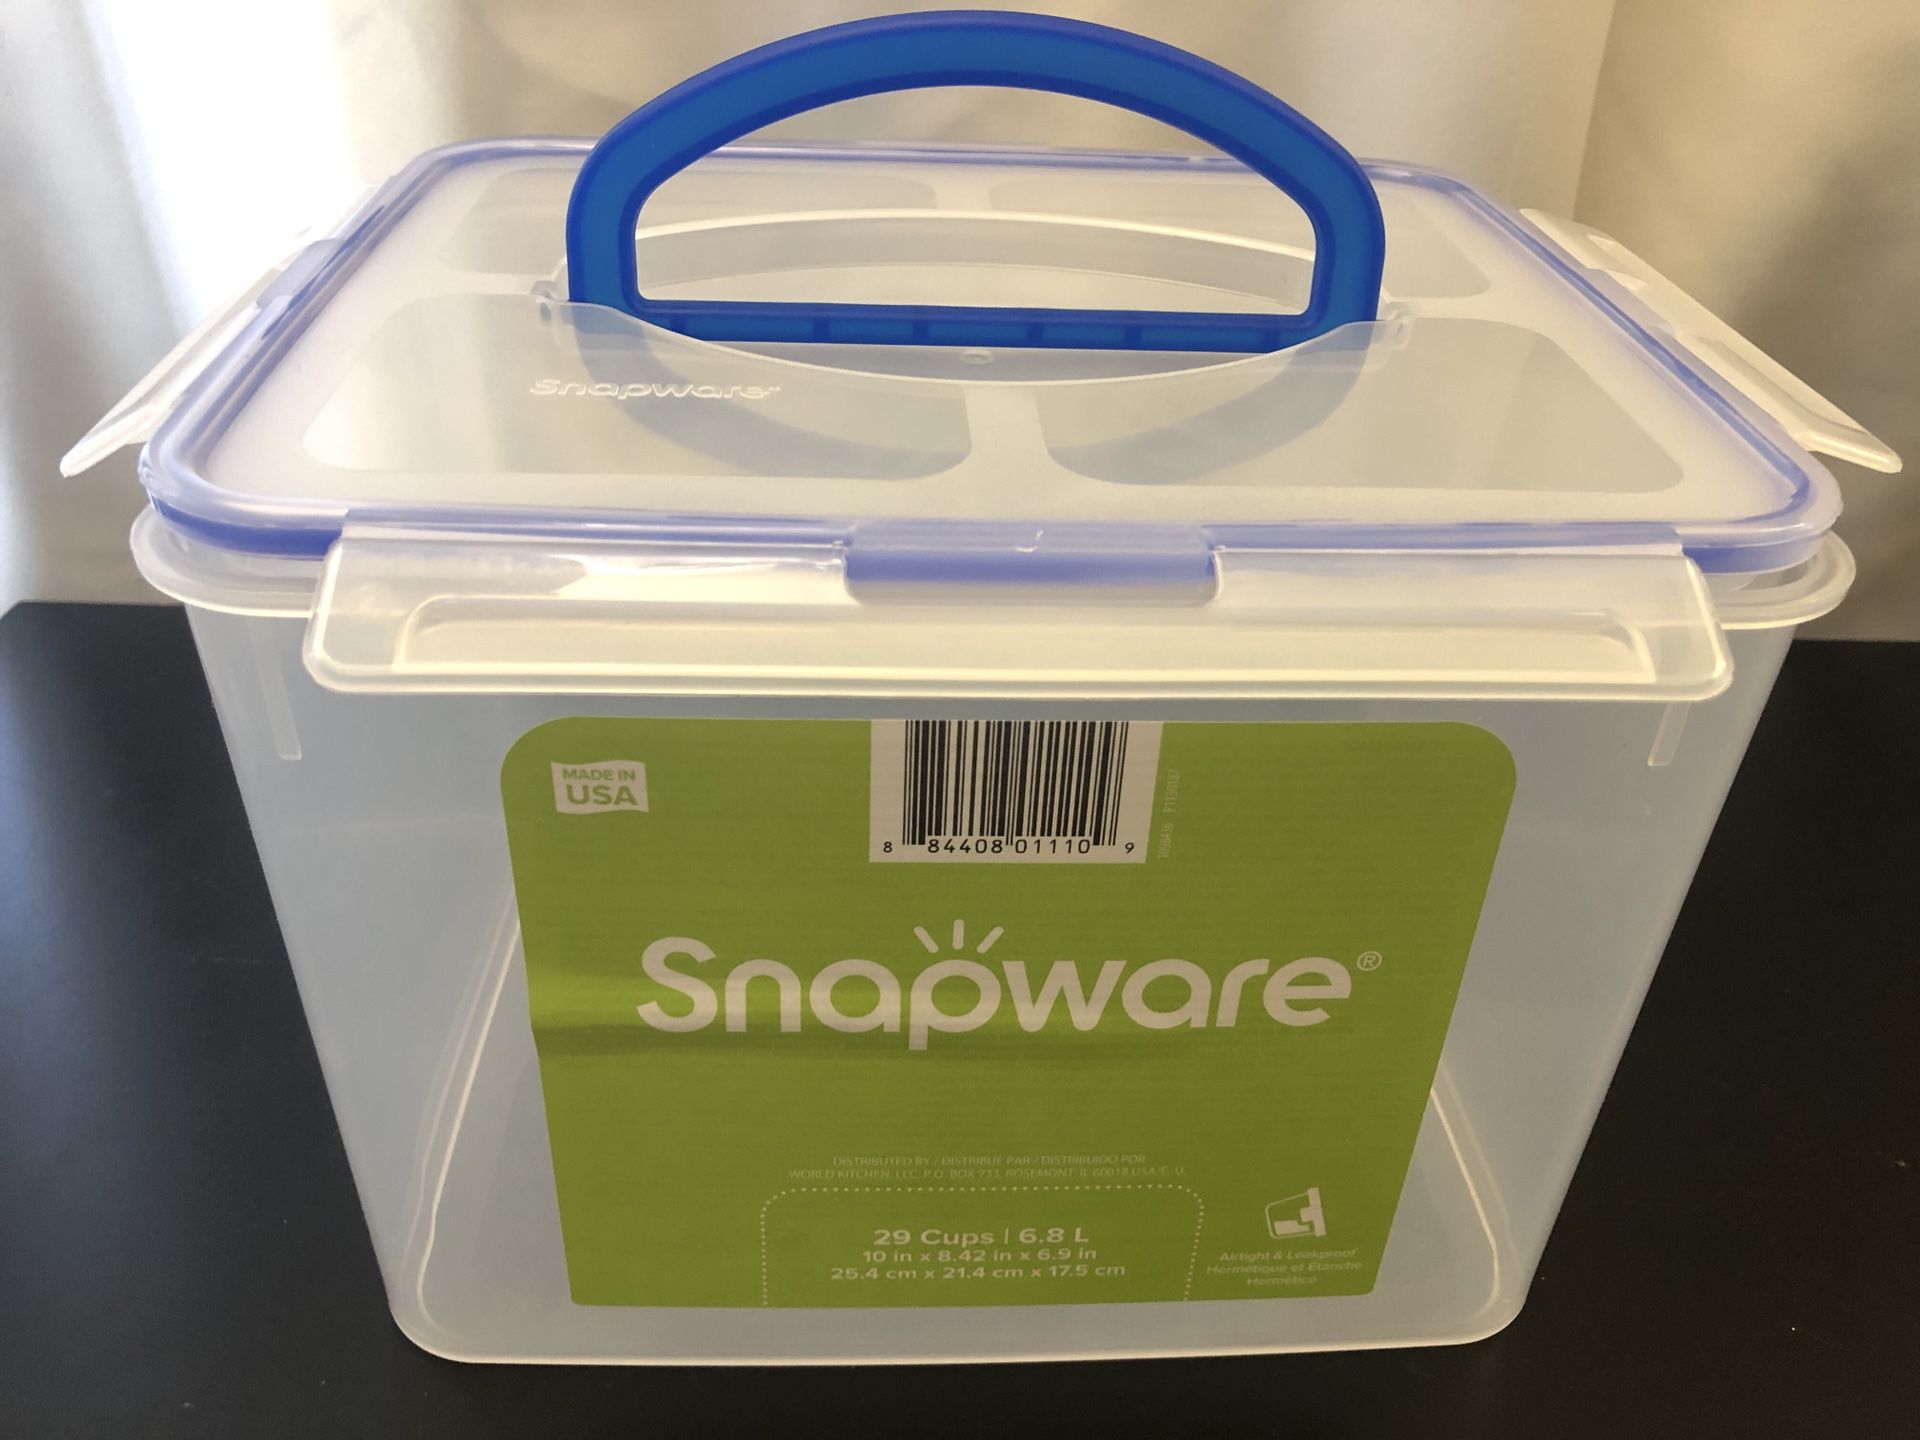 Snapware Storage